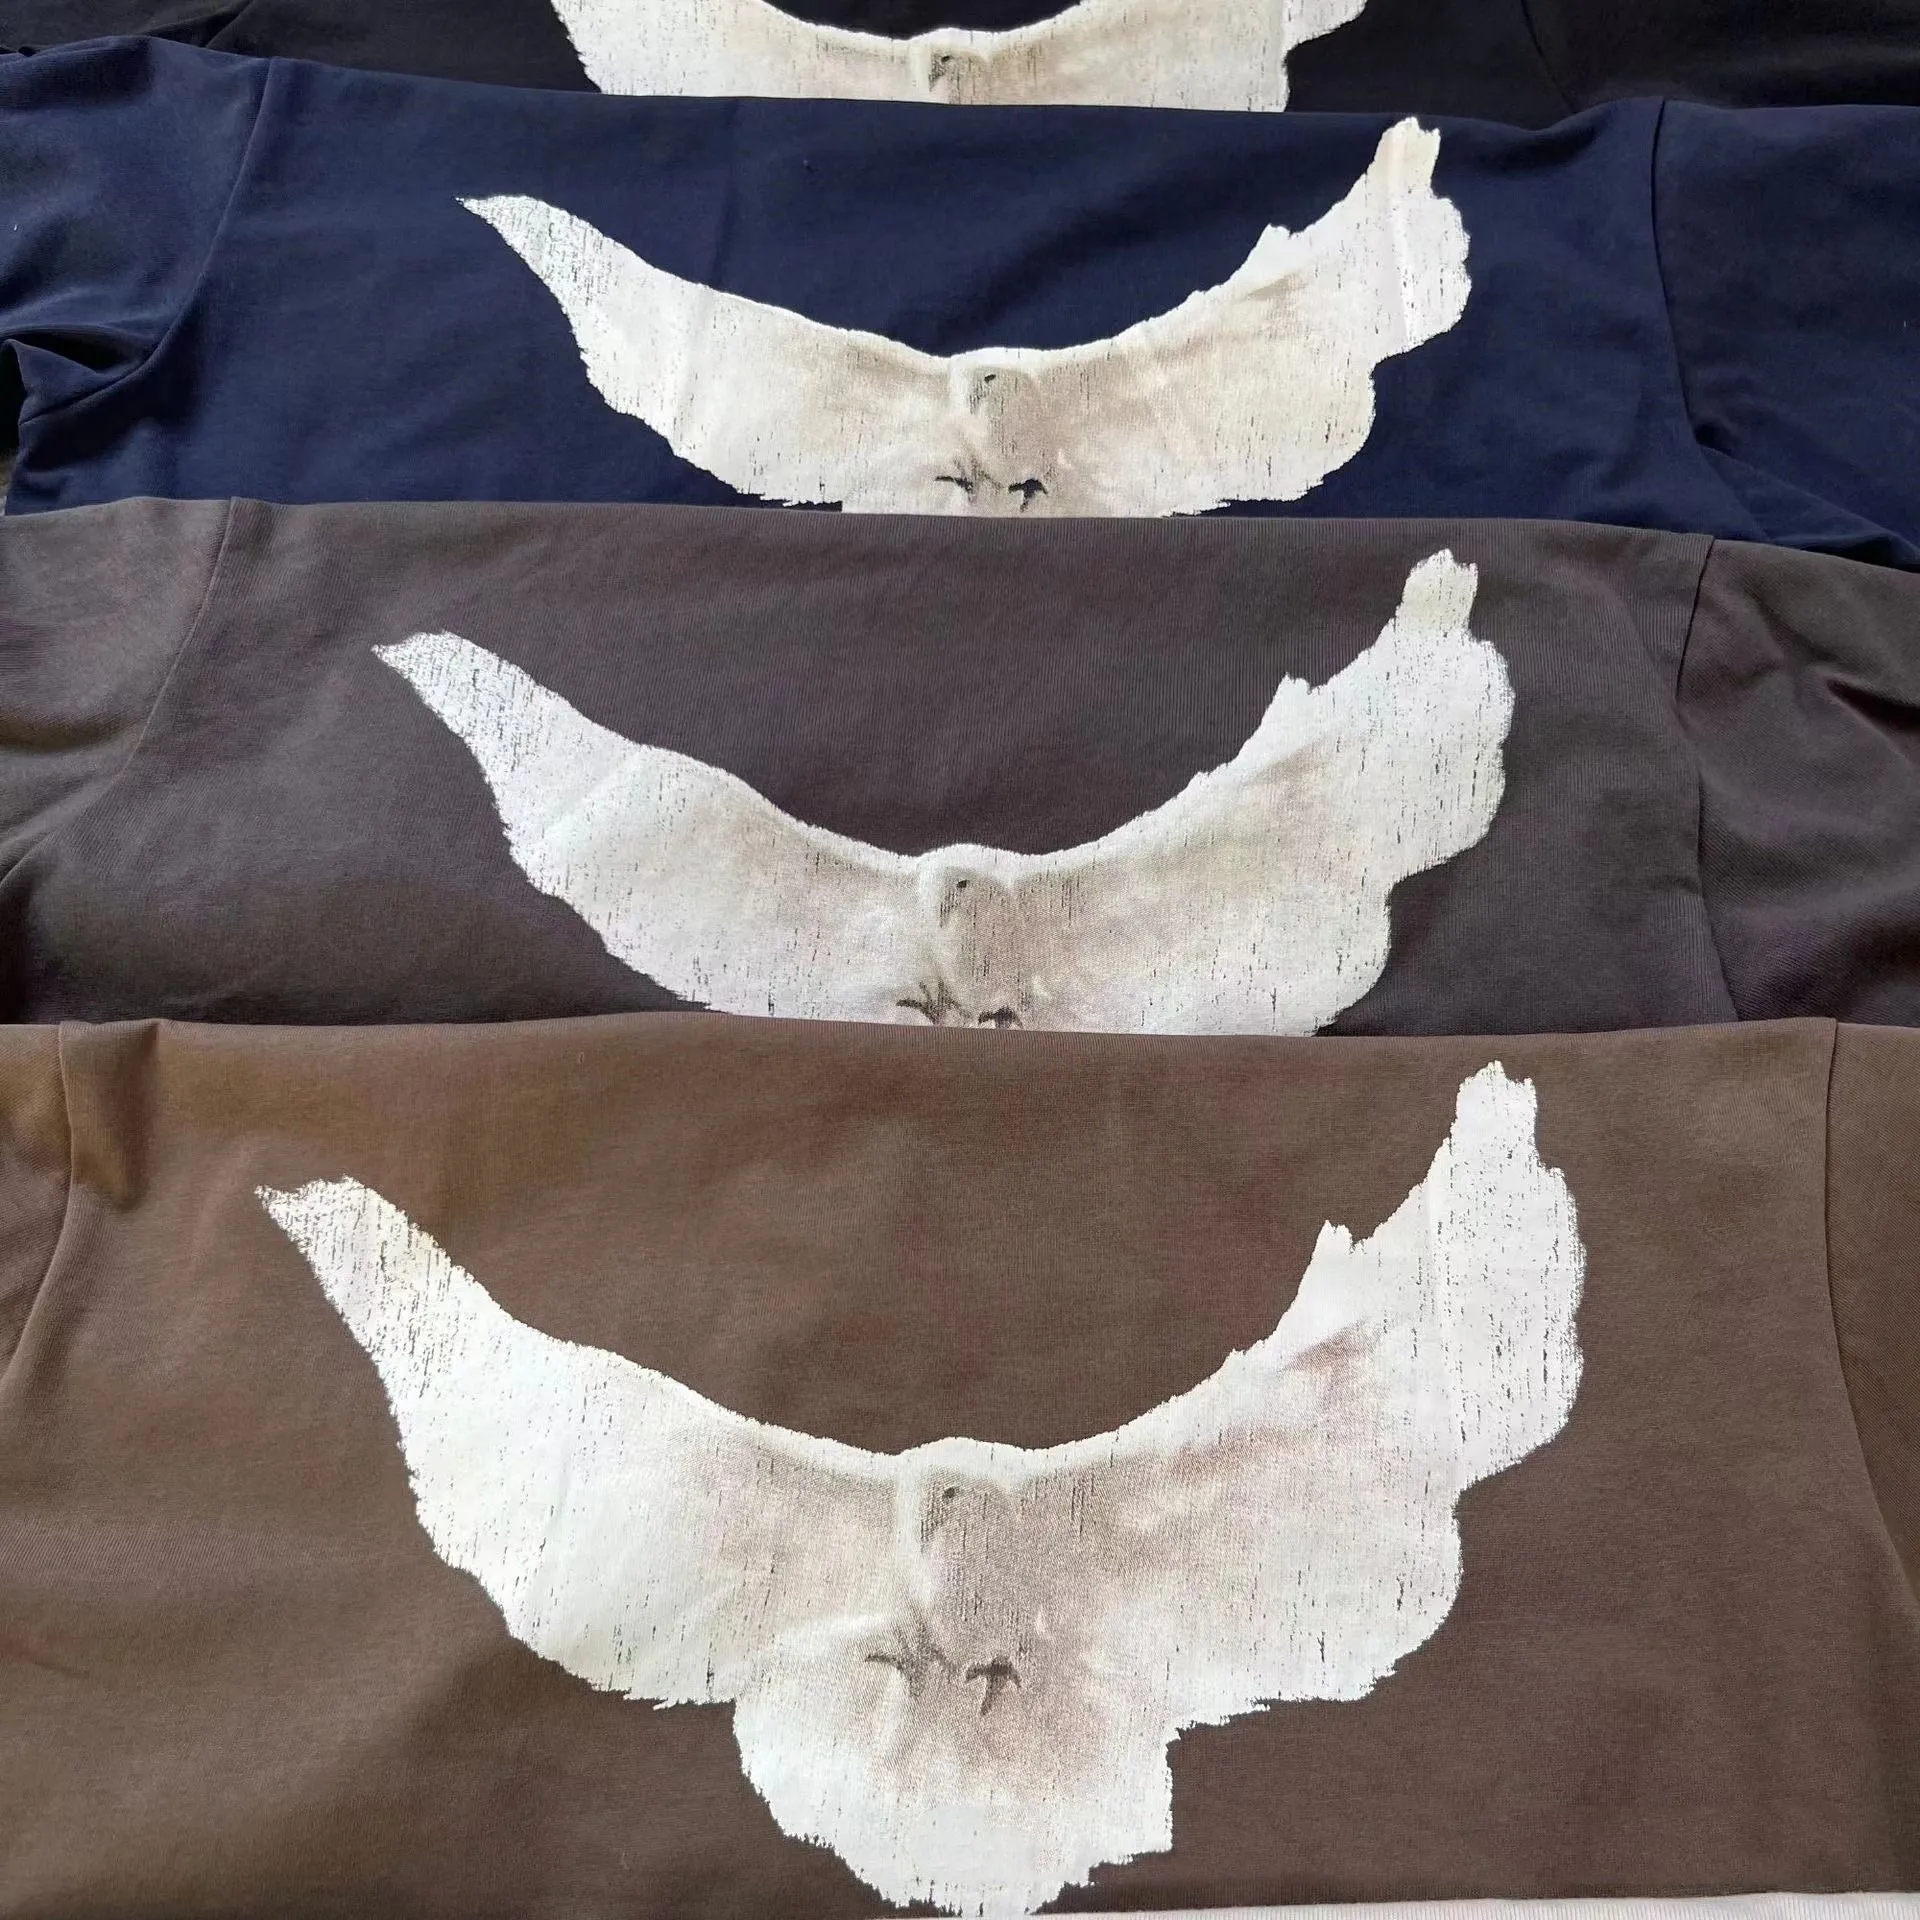 mens designer t shirt tshirt designe shirt 260g weight cotton febric mens womens unisex  pattern Wholesale 2 pieces 5% off